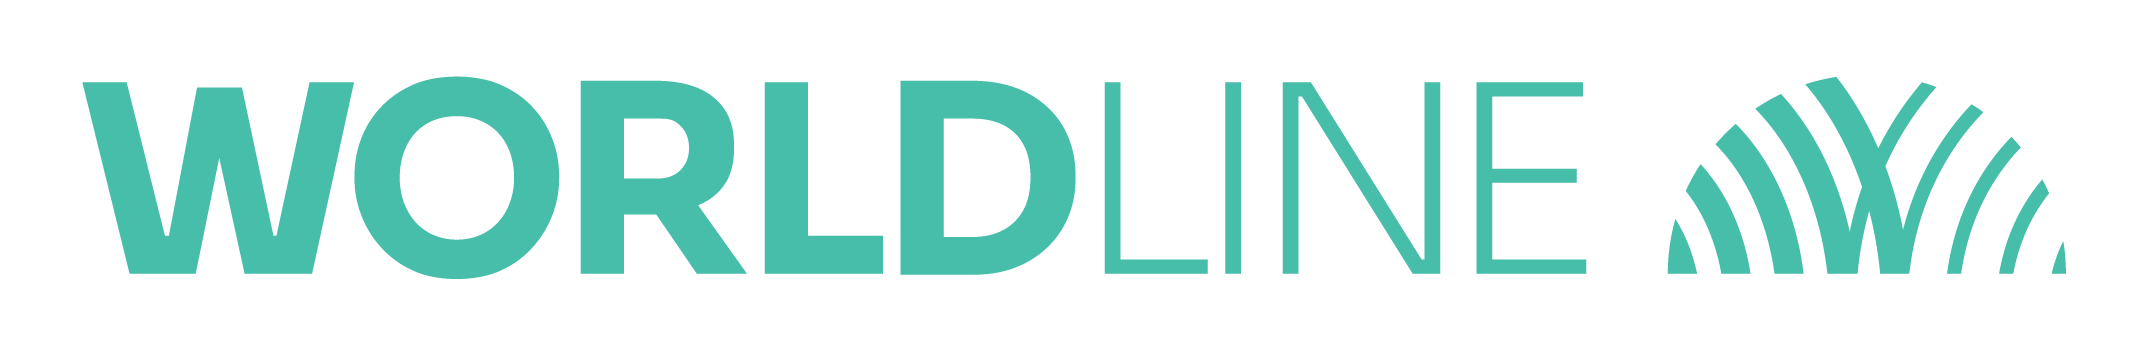 logo-worldline